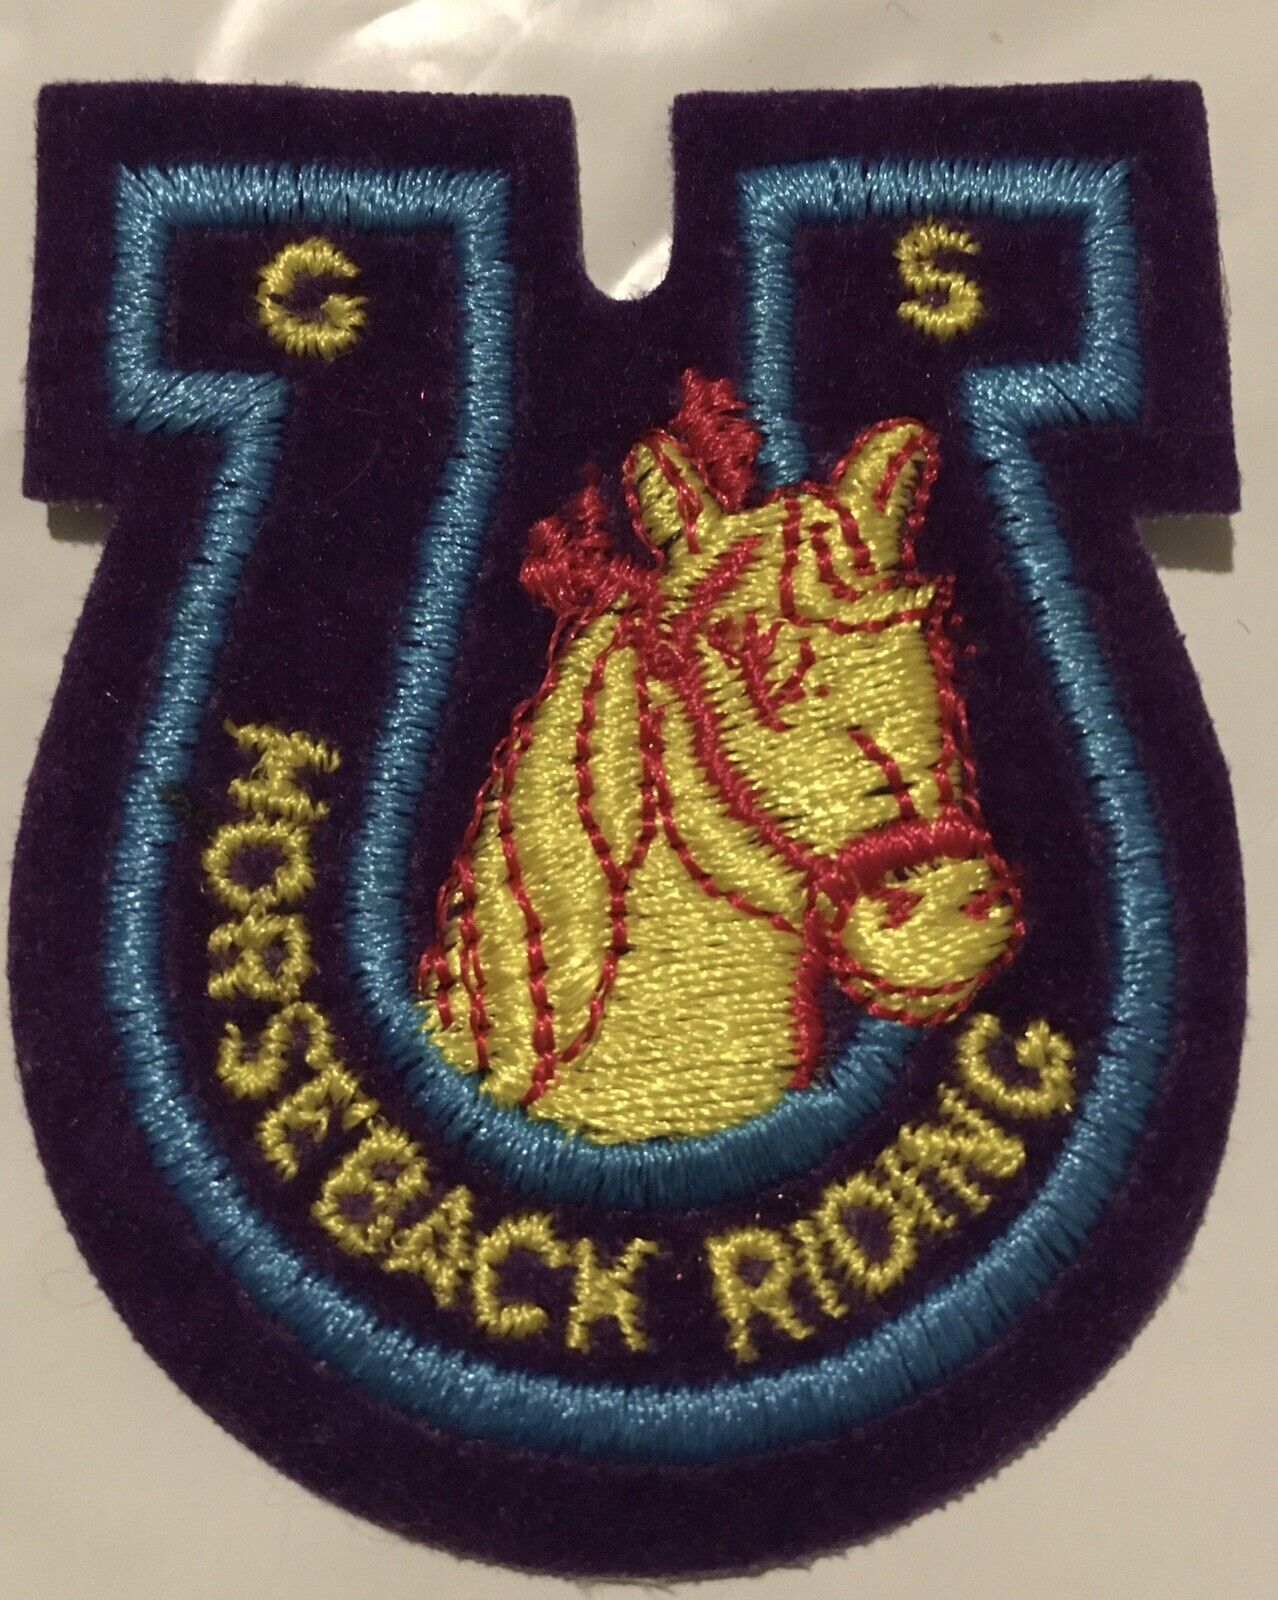 GSA Horseshoe Patch - Girl Scouts Of America Horseback Riding Badge